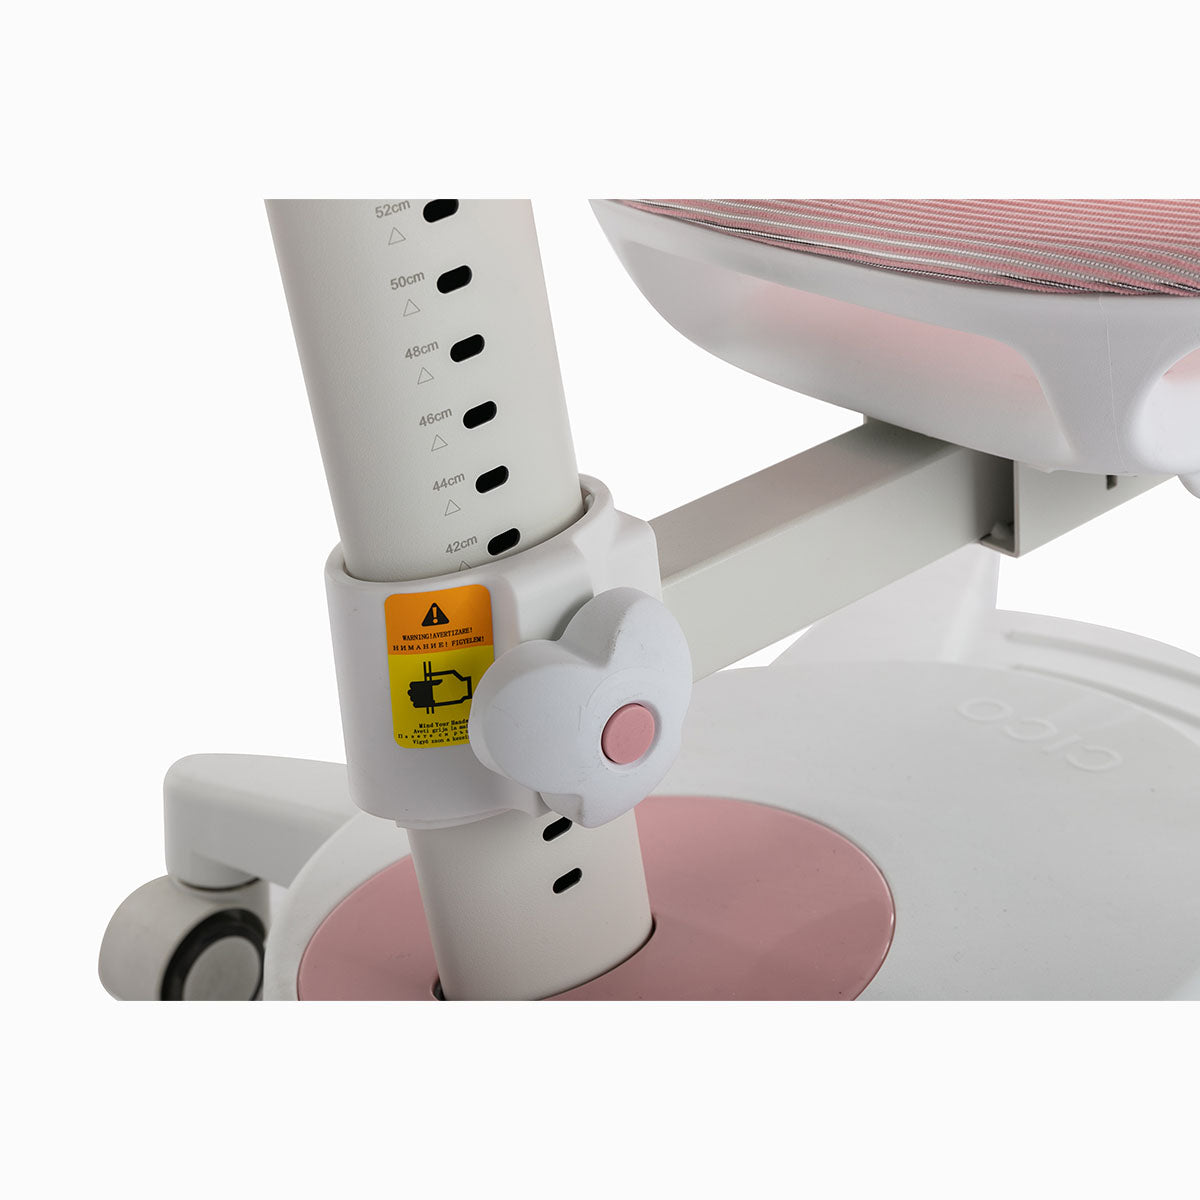 IMPACT - IM-YB606-PK - Kids Ergonomic Mesh Chair (Pink)